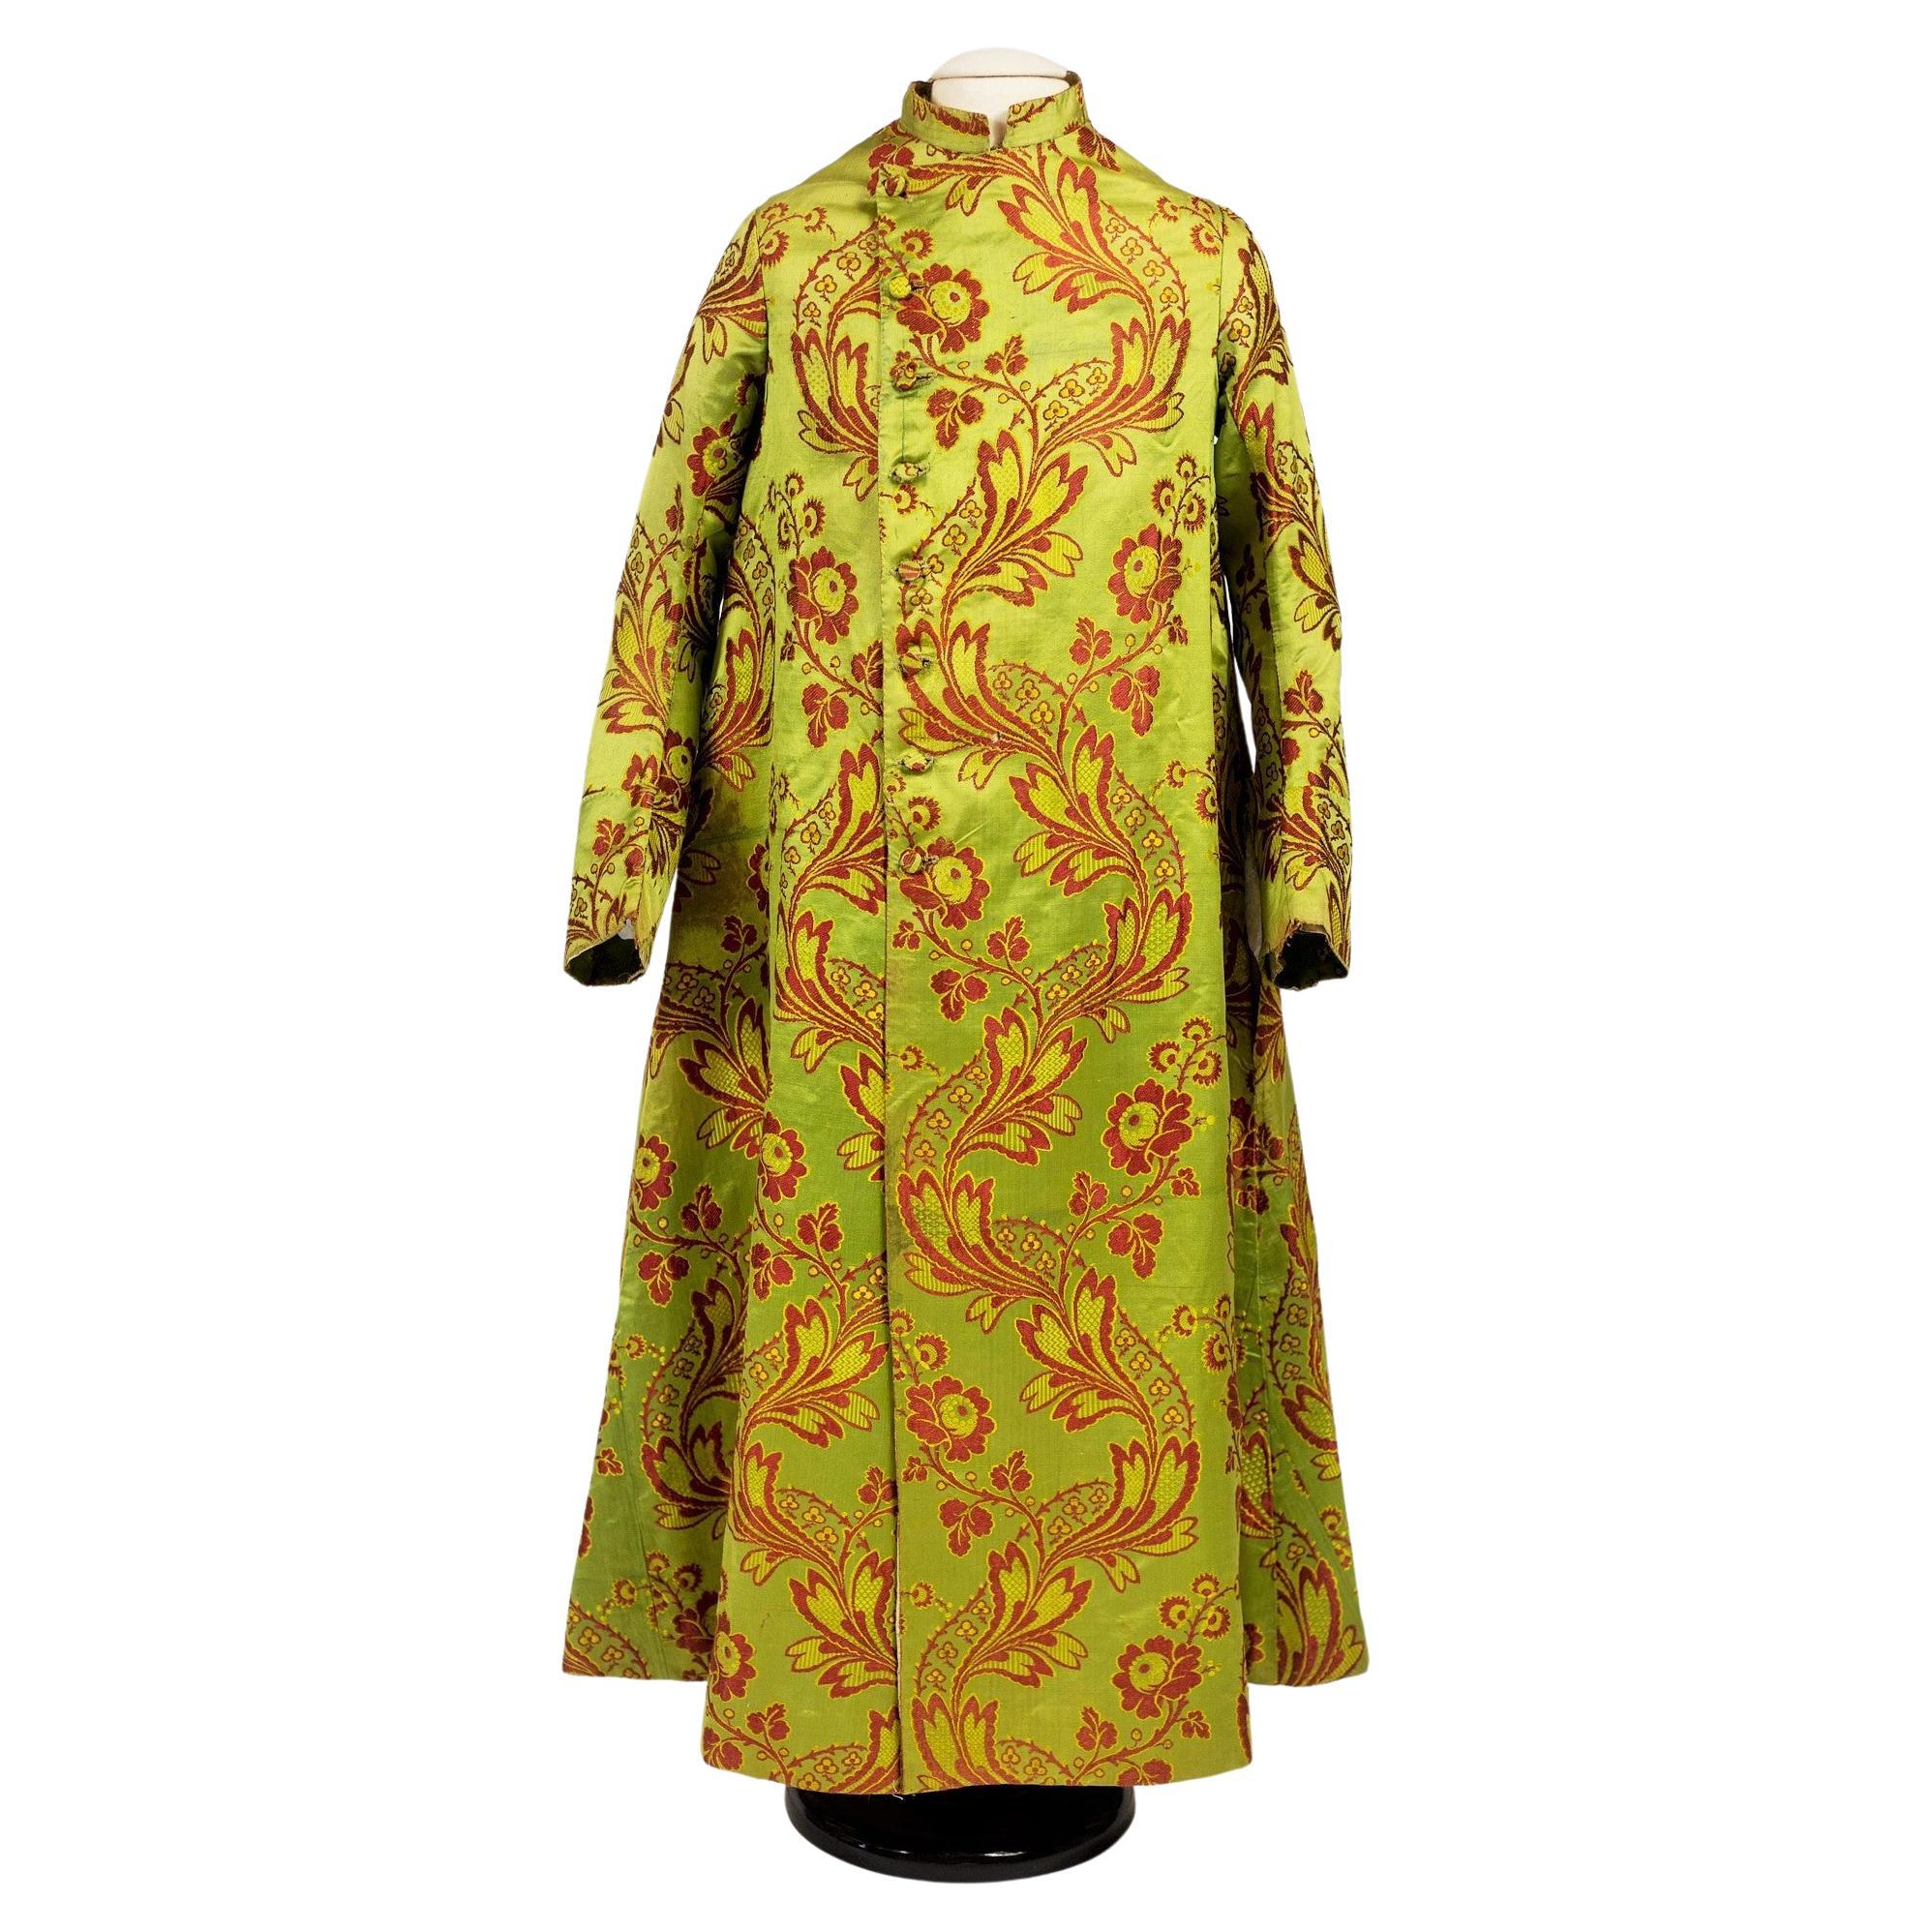 A Lampas Silk Morning Gown or Man's Banyan Museum Piece France Circa 1760